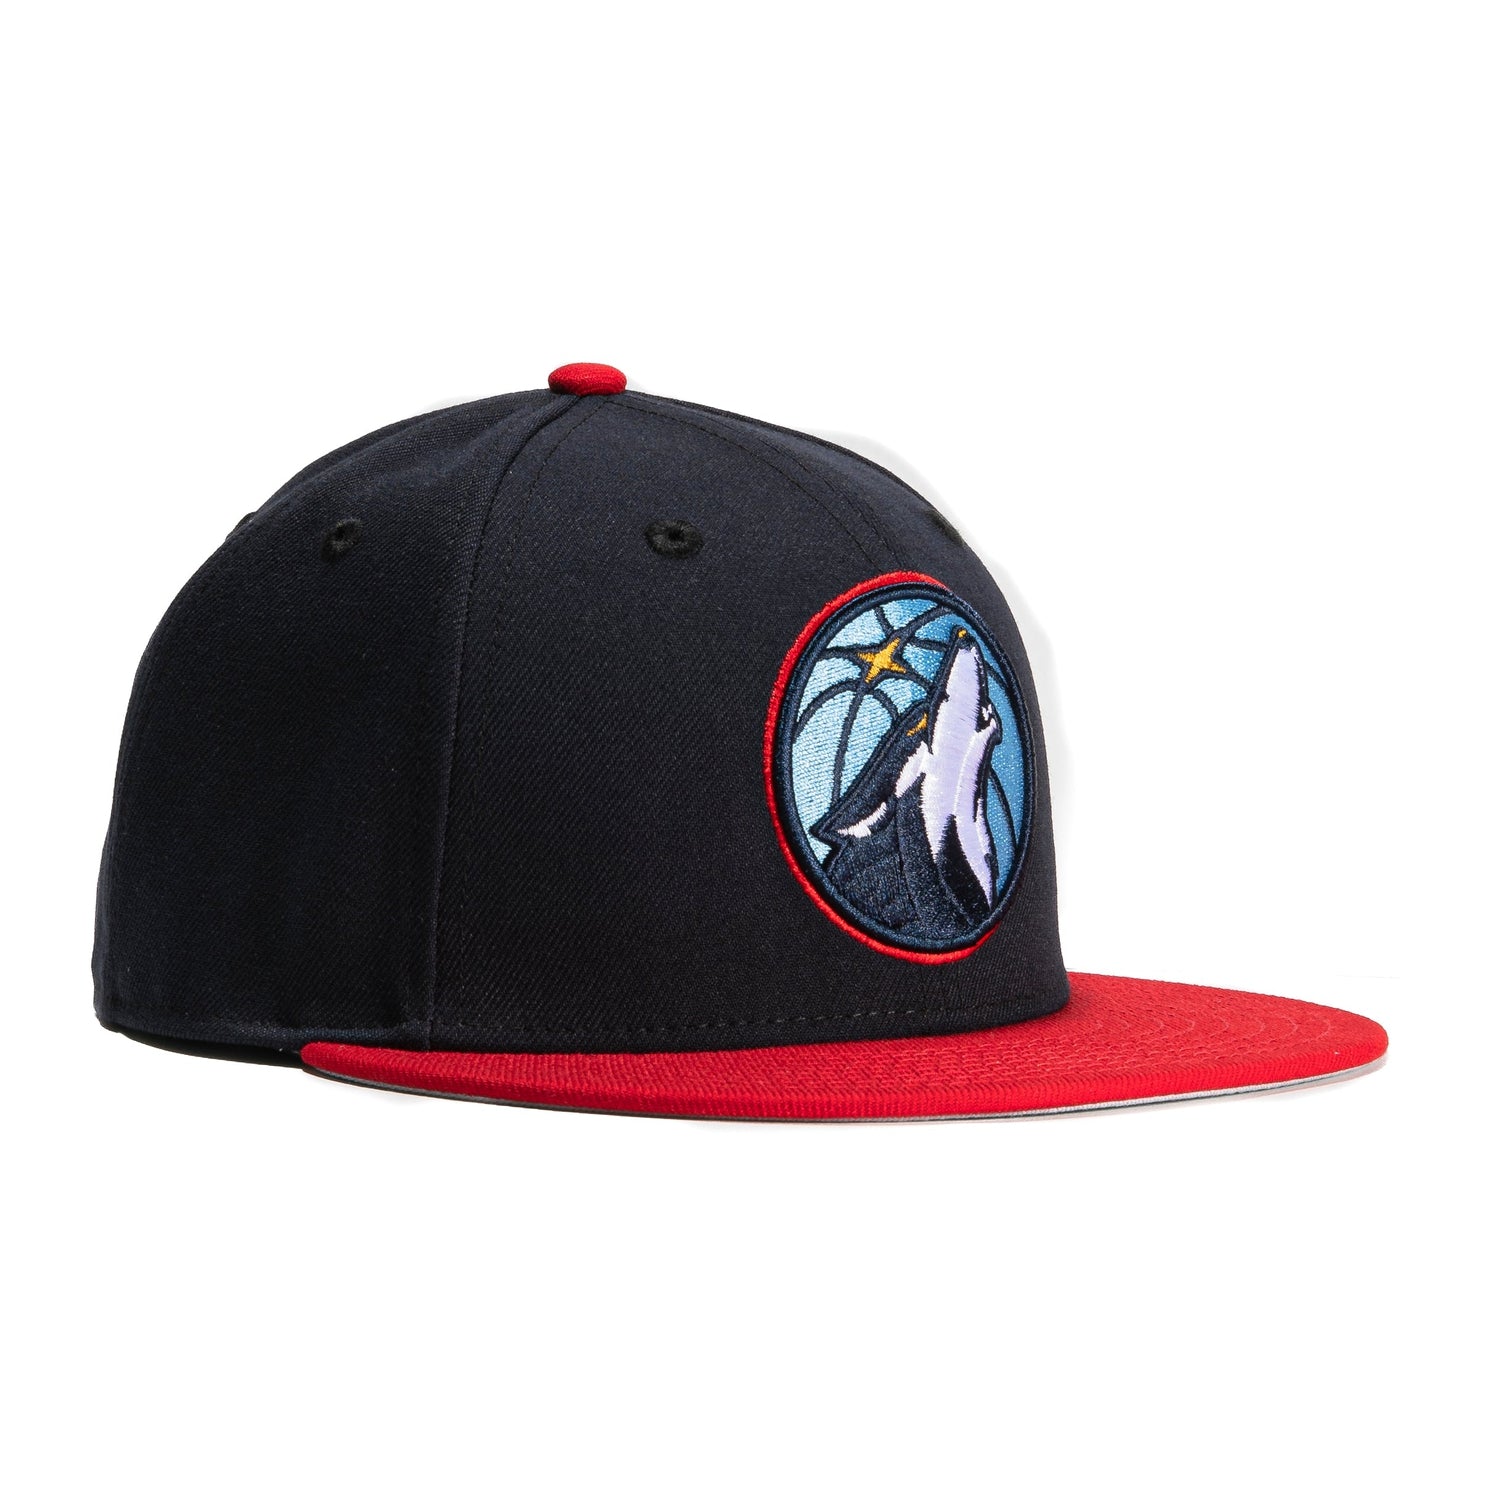 New Era 59fifty Minnesota Timberwolves Hat Cap Brown Size 7 3/8